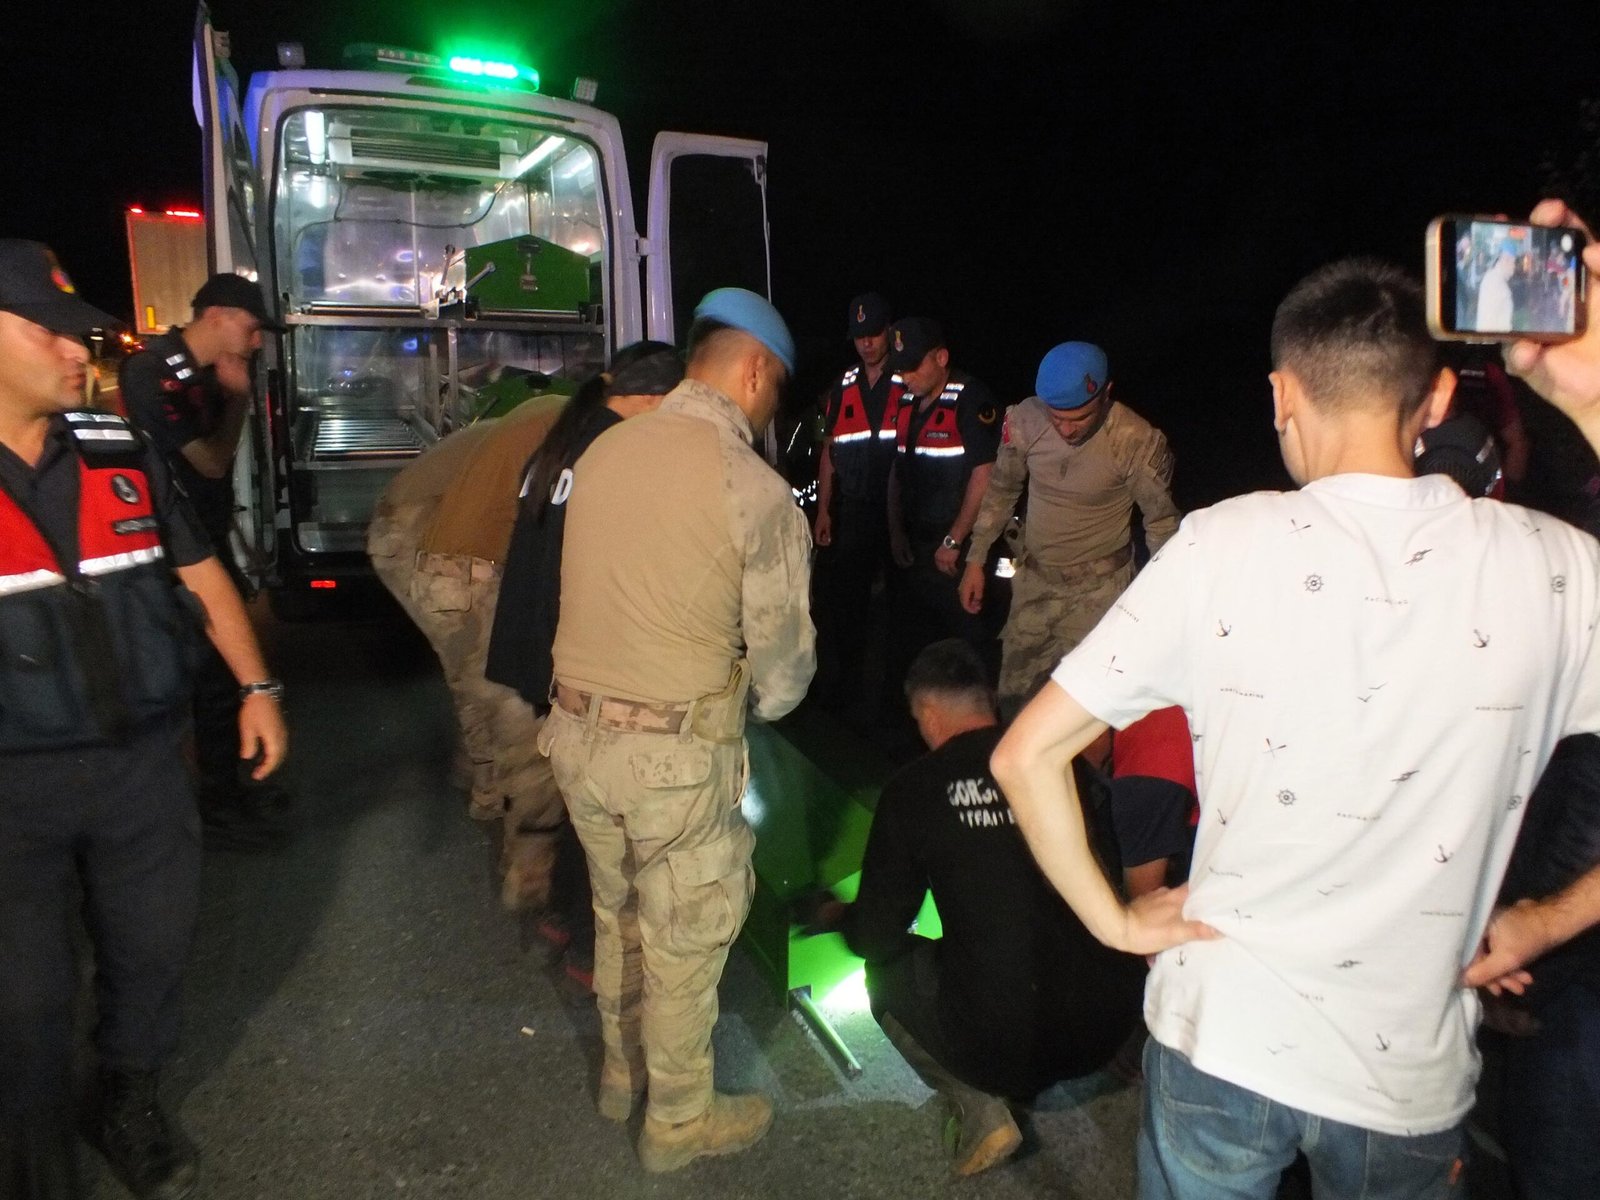 yozgat'ta feci kaza! yolcu otobüsü şarampole yuvarlandı: 12 ölü, 19 yaralı